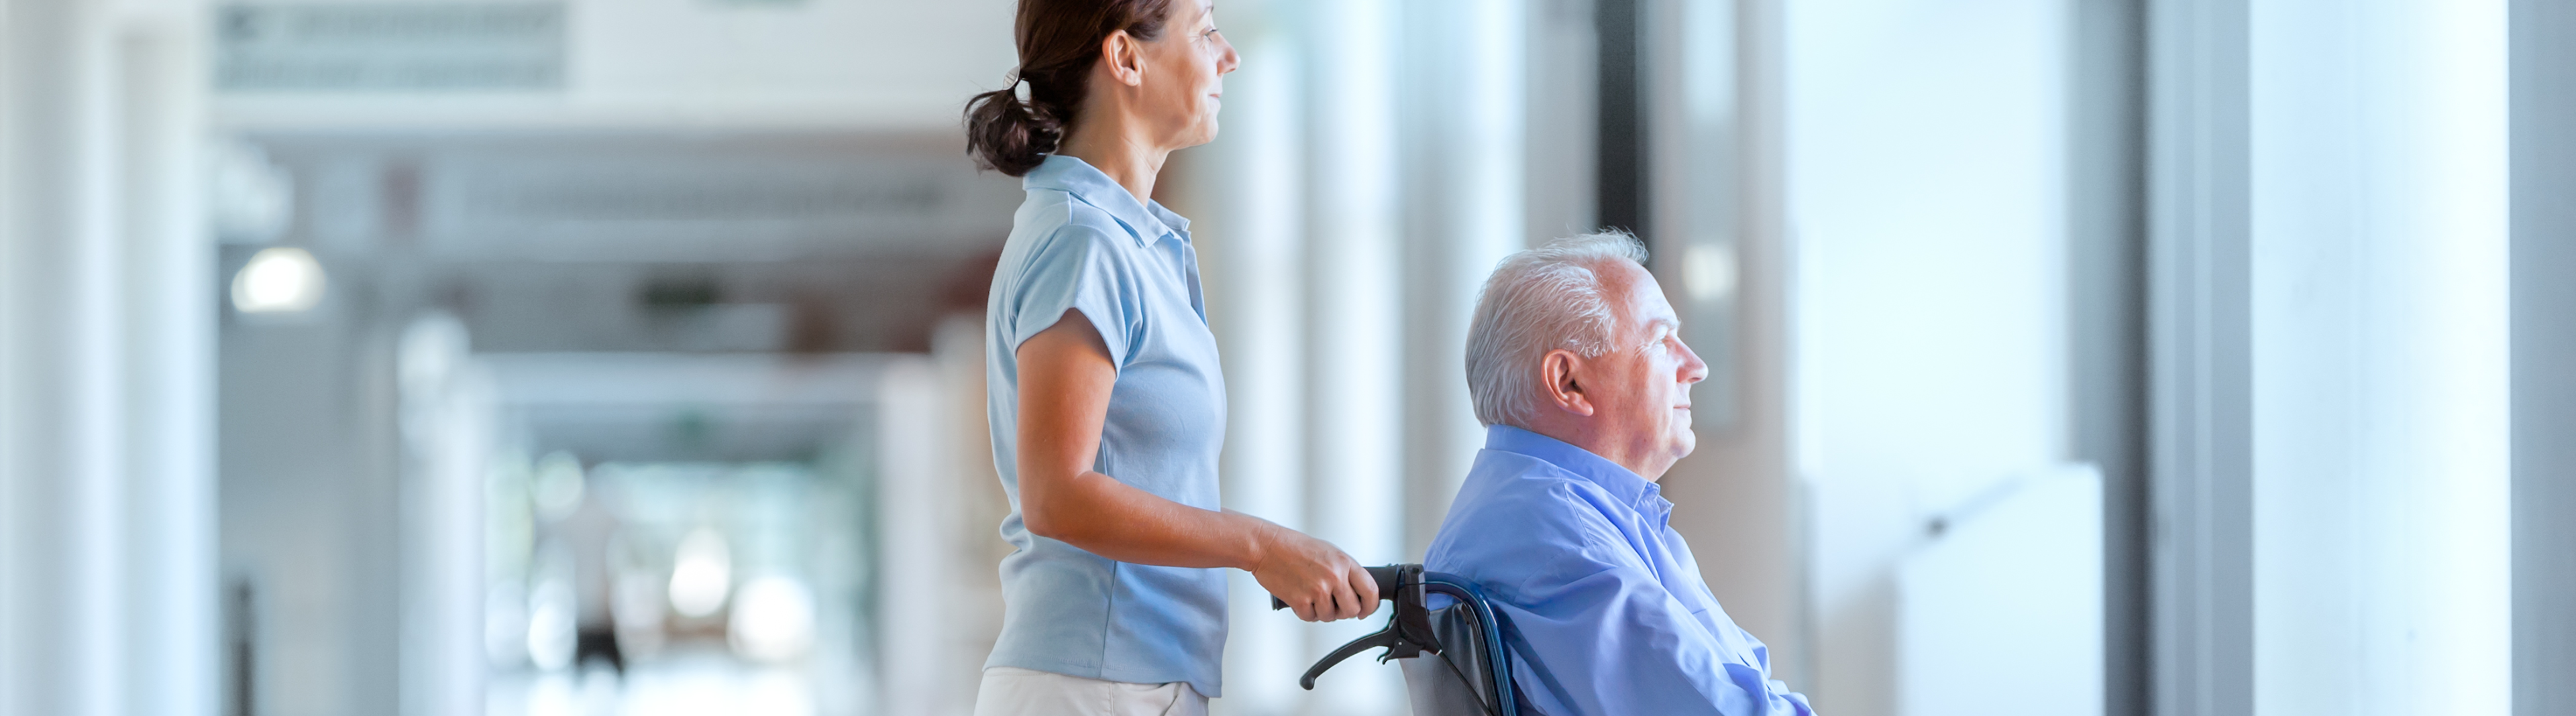 Female pushing older man in wheelchair in hospital setting